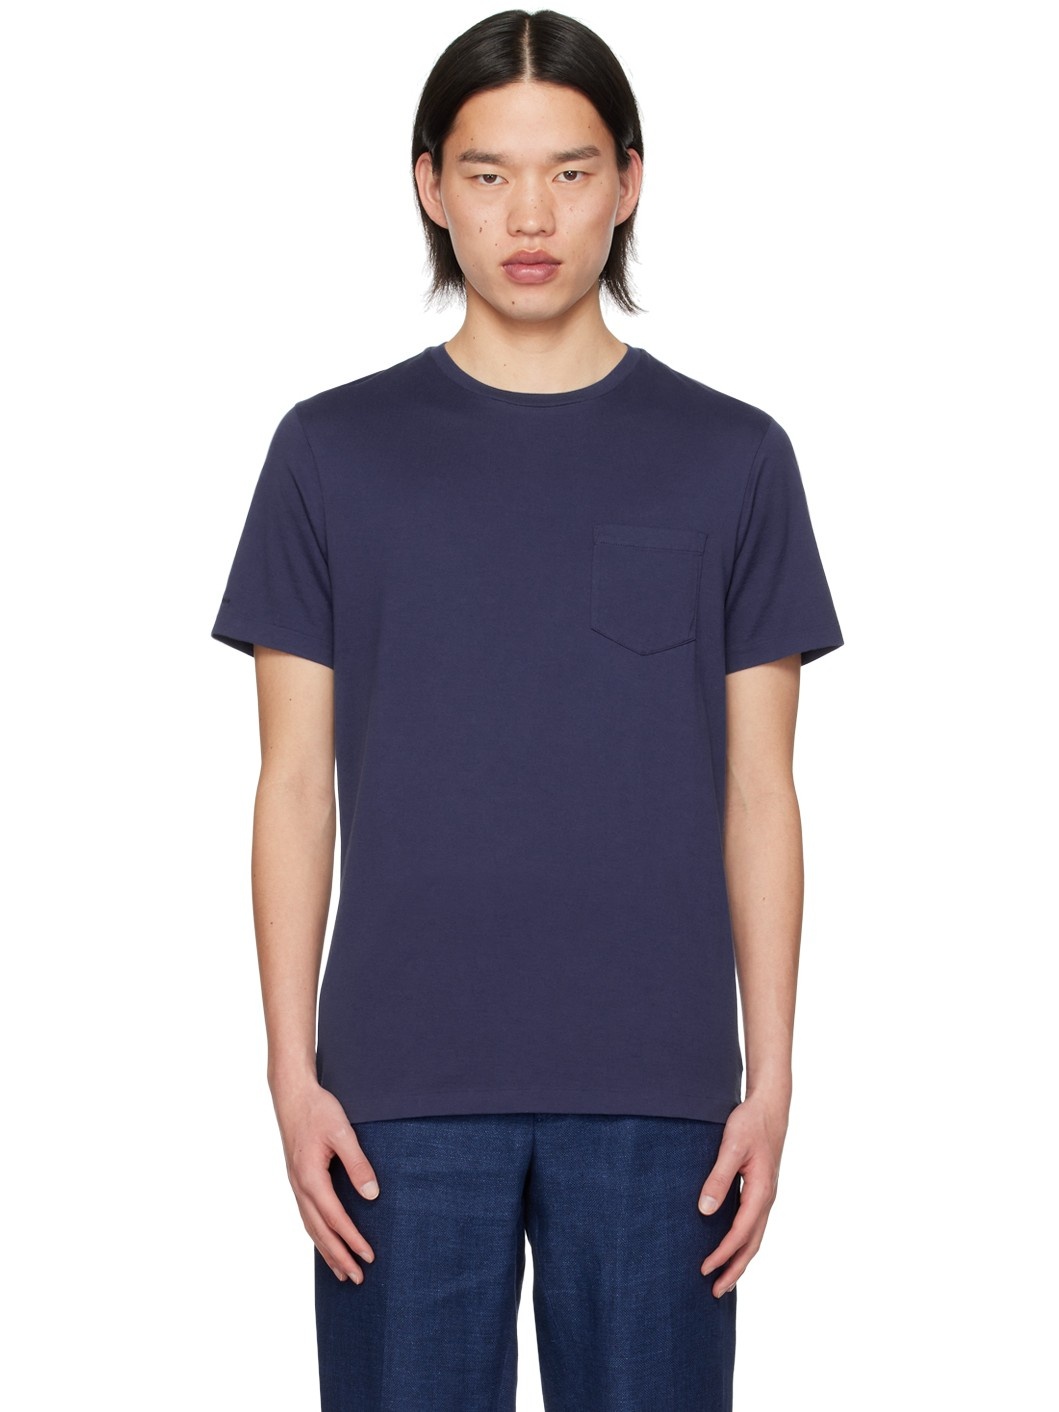 Blue Pocket T-Shirt - 1